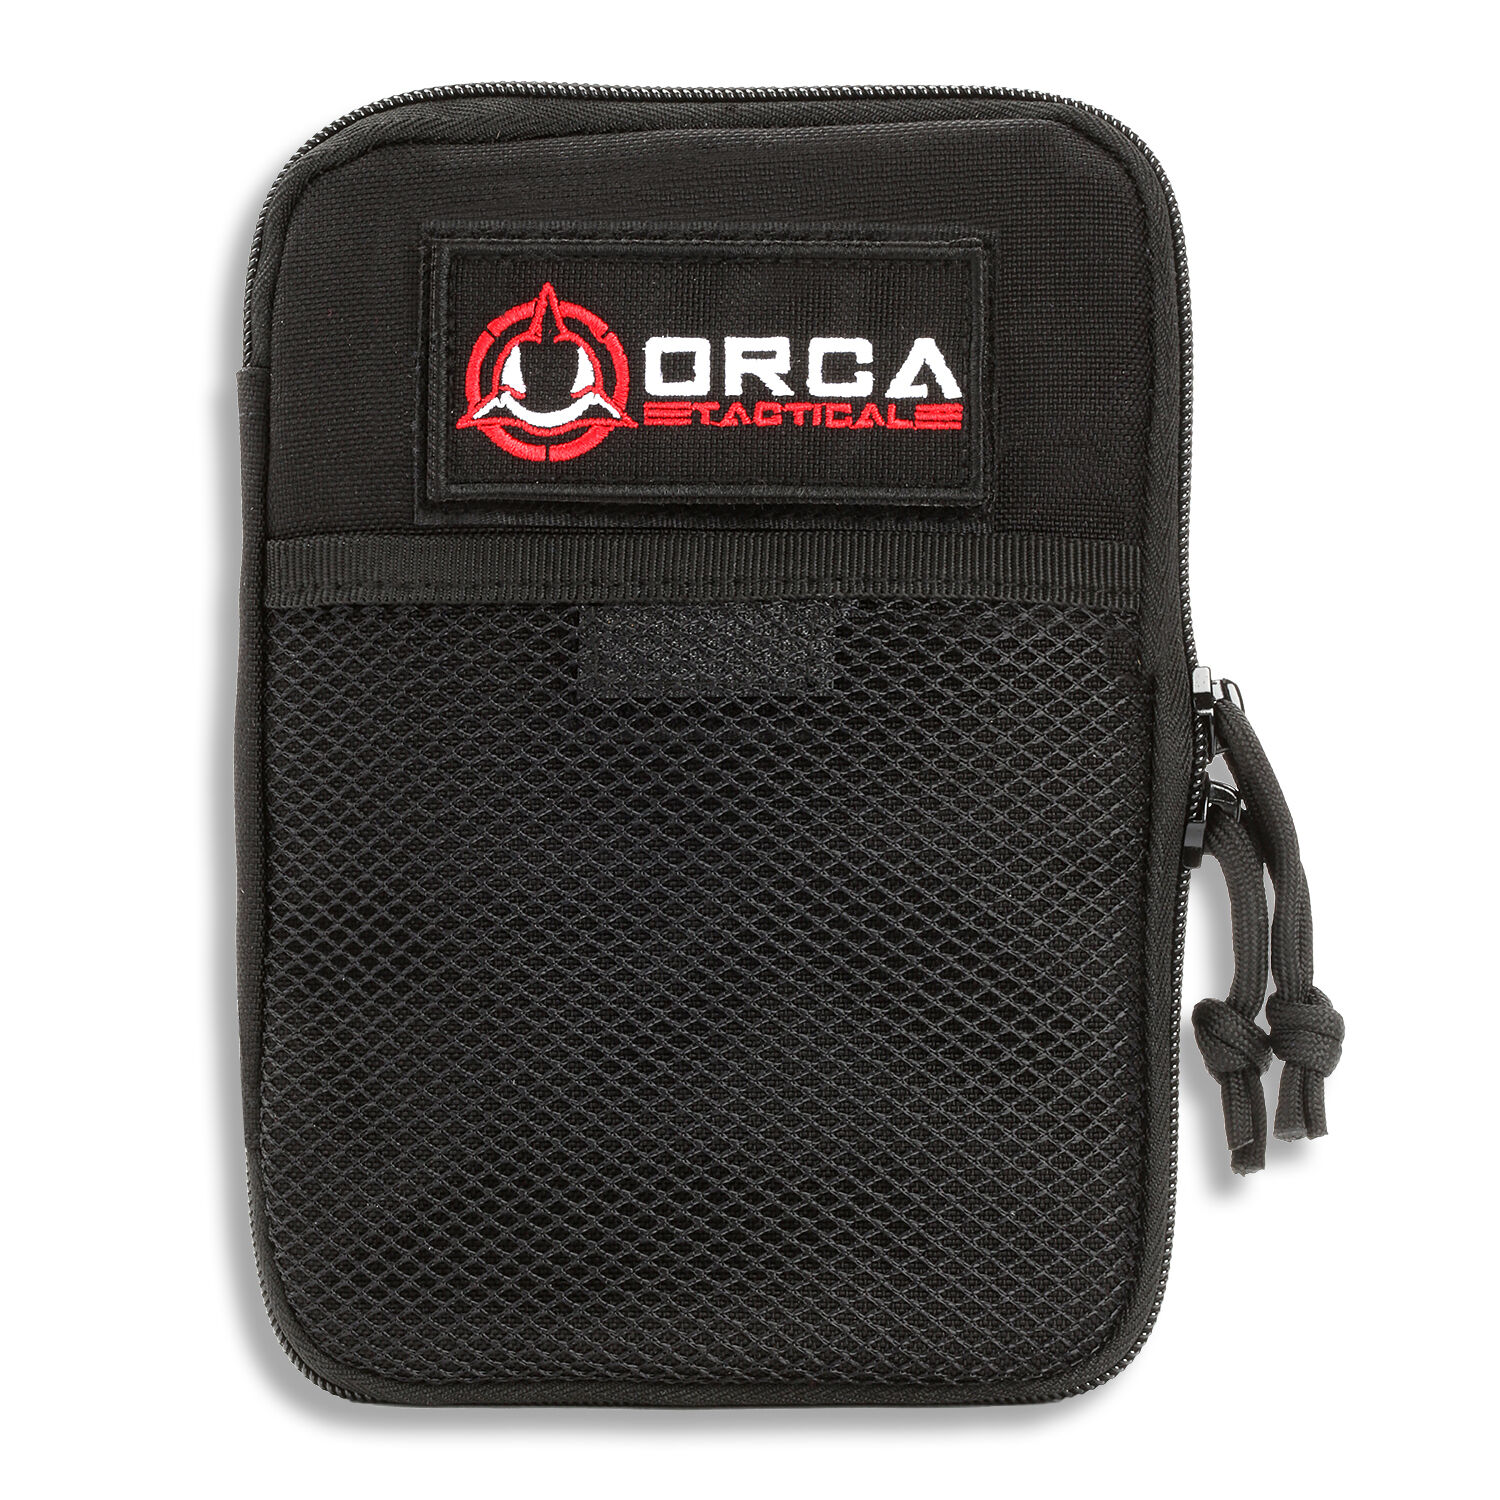 Orca Tactical Molle Gadget Edc Utility Waist Belt Pouch Small Tool Organizer Bag